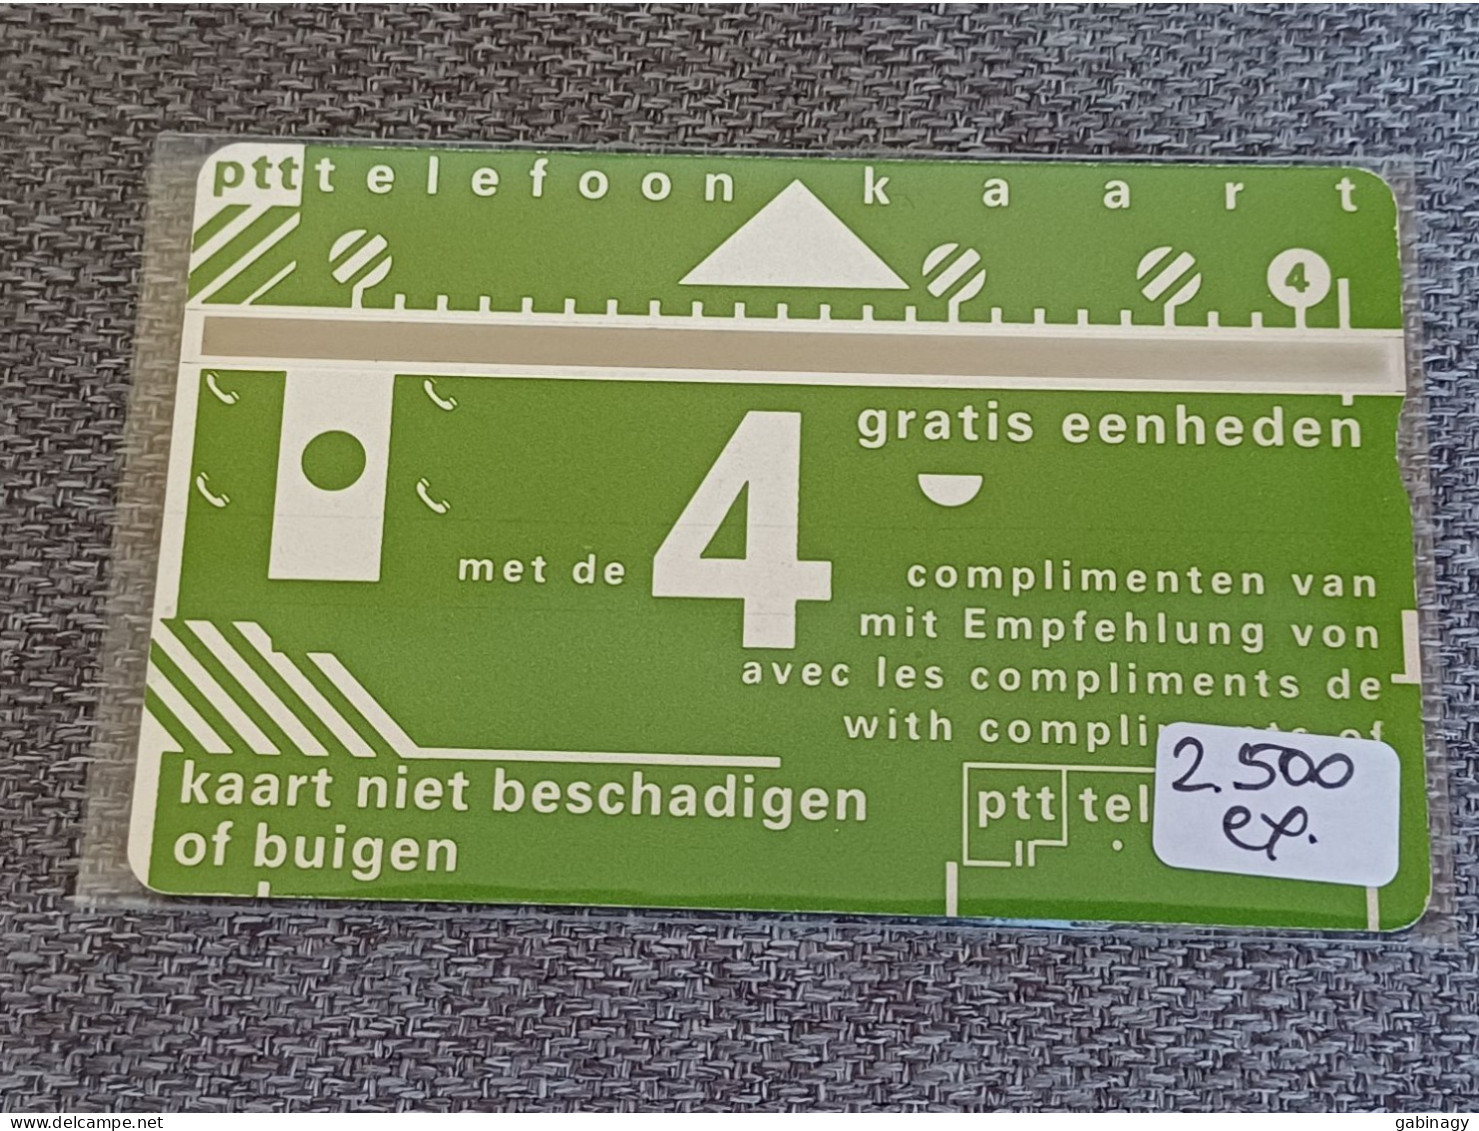 NETHERLANDS - RCZ004 - Dordtsche Postzegelhandel - 2.500EX. - Private